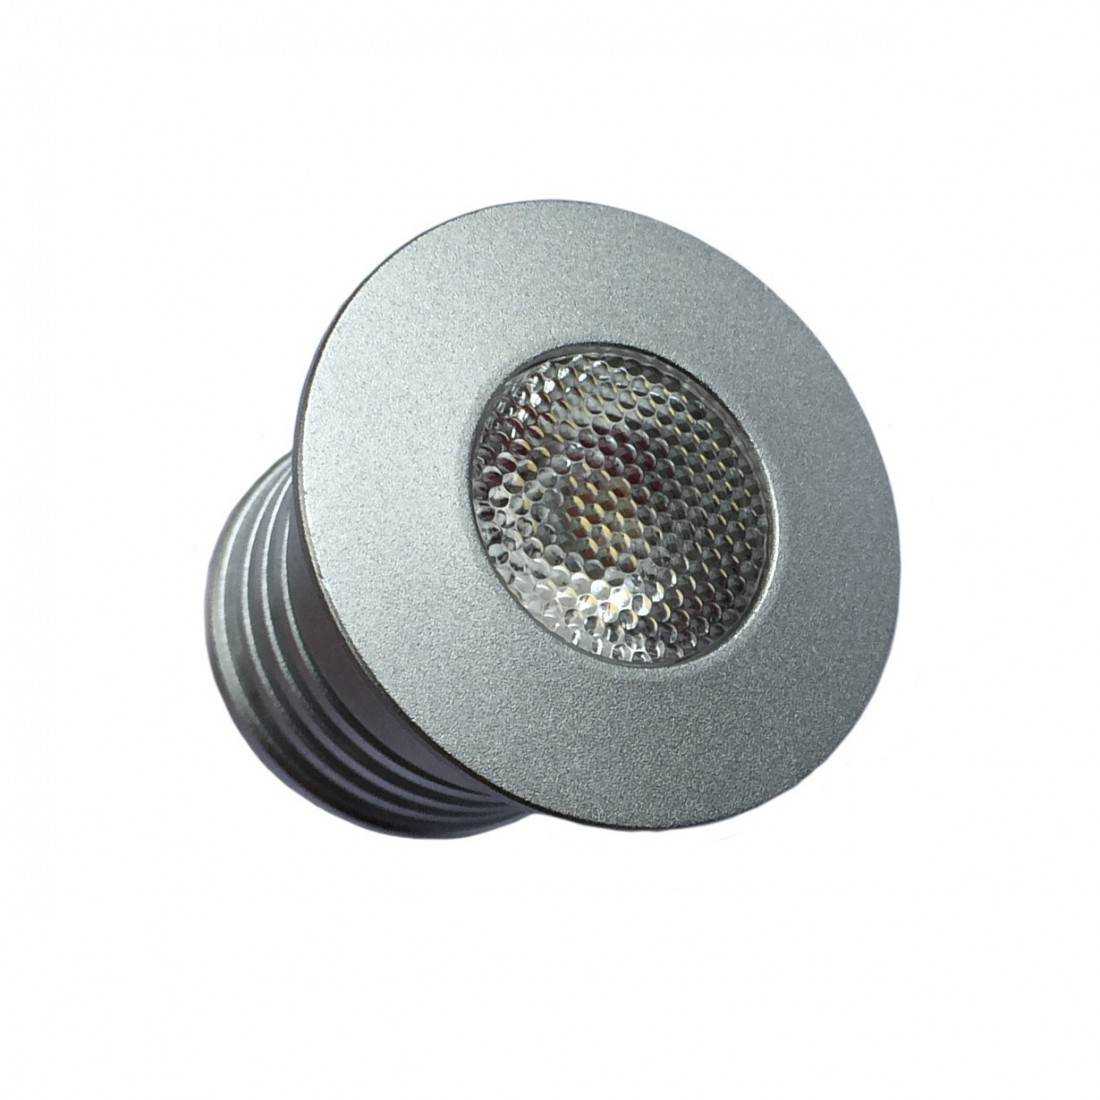 Lampes mini spot led encastrable diametre 55 mm - Cdiscount